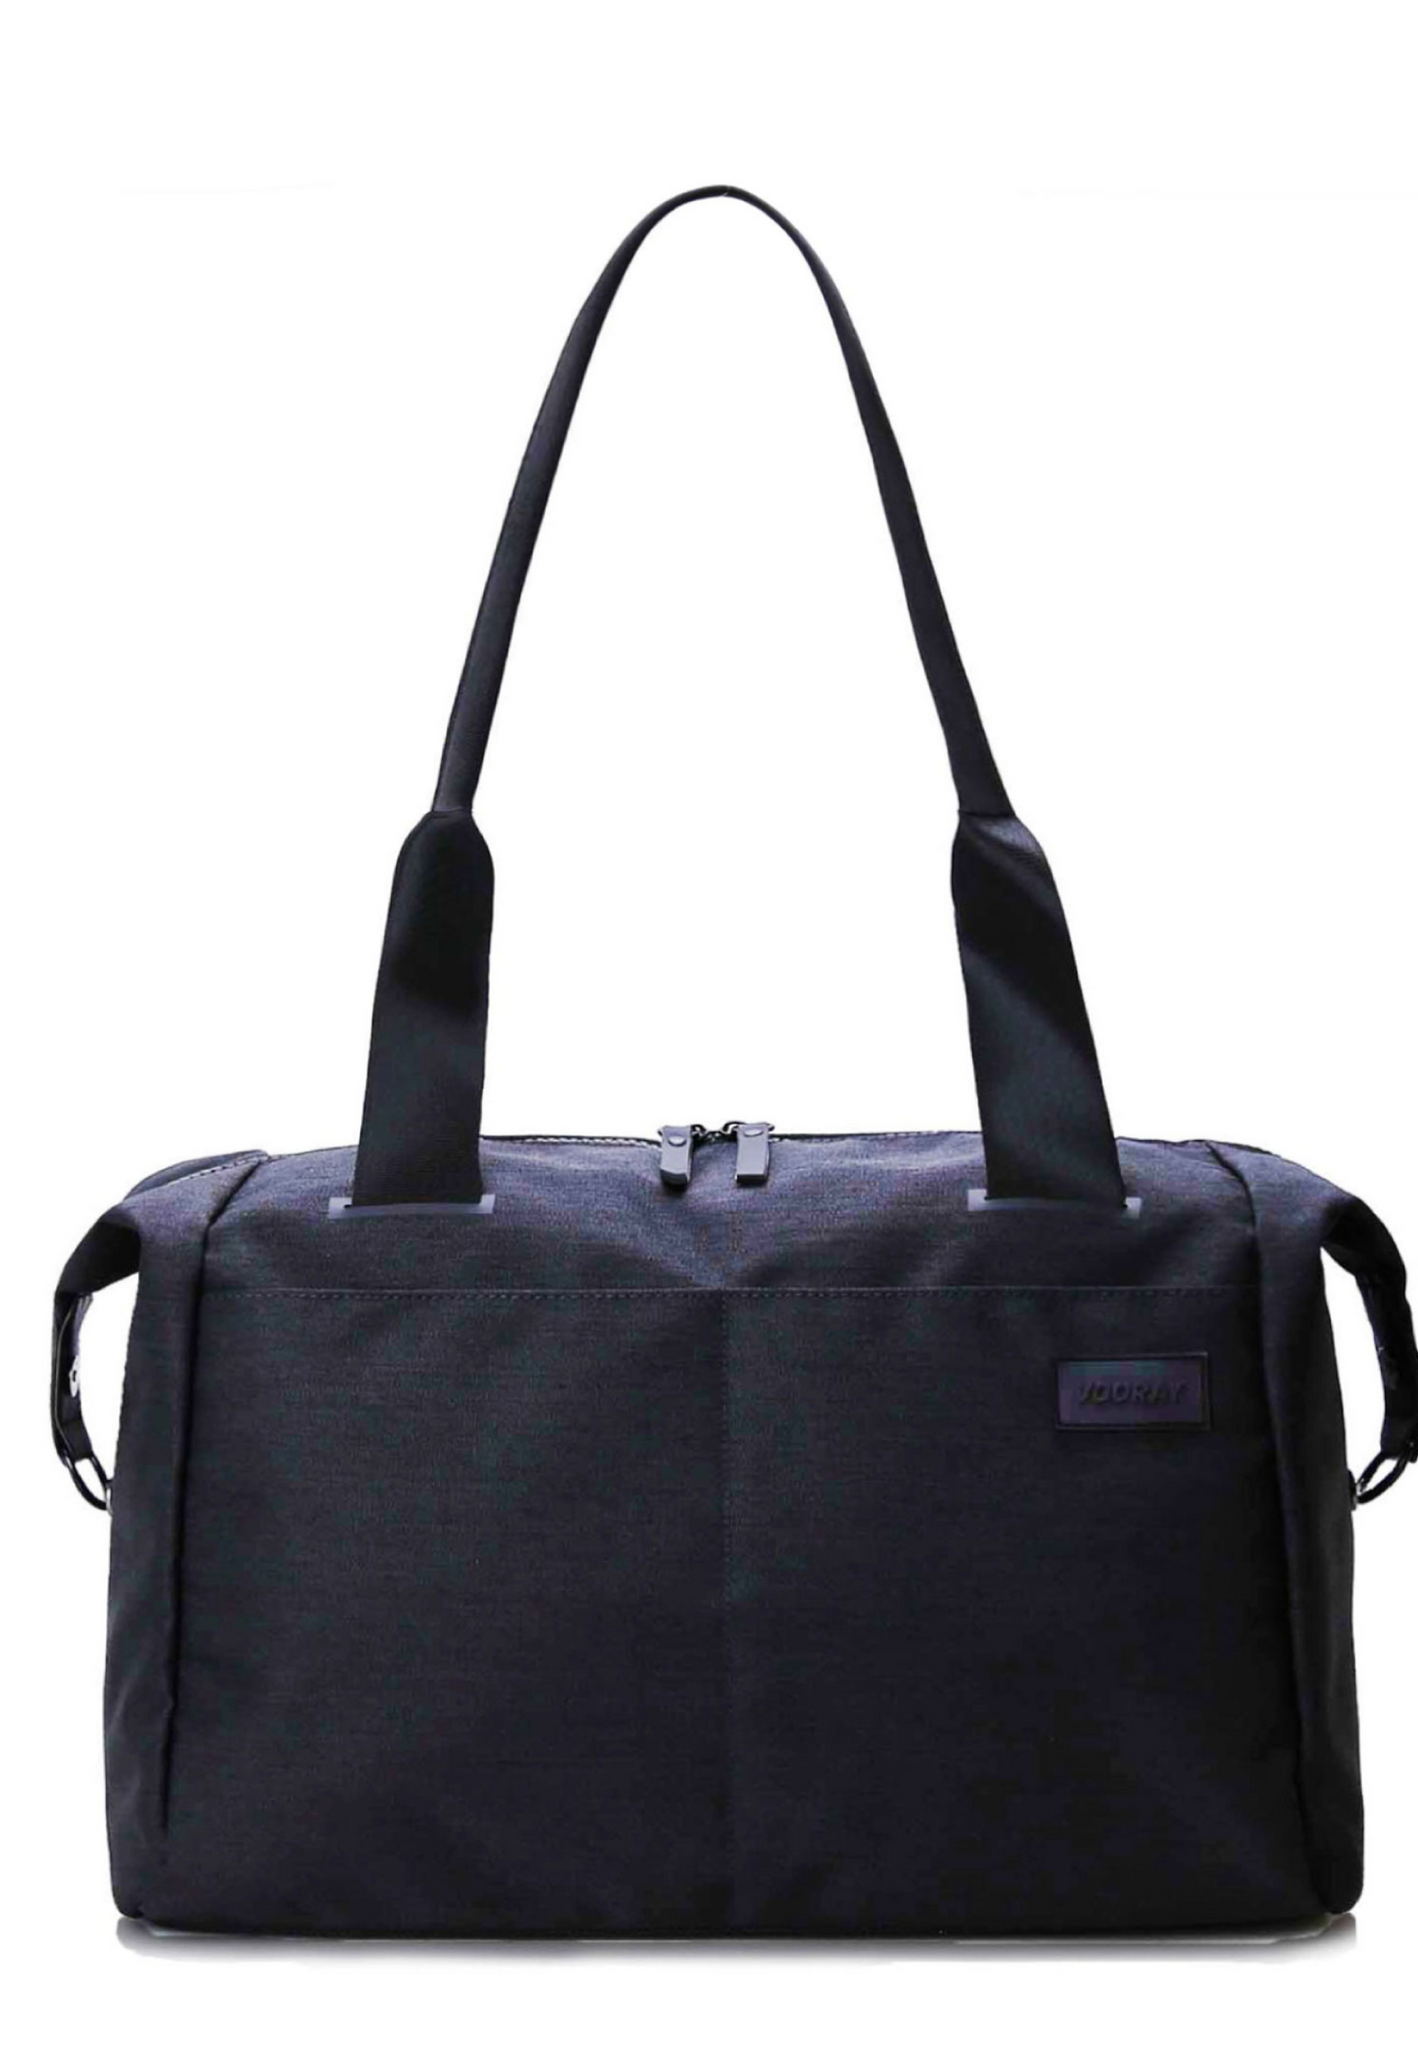 Vooray Alana Duffel - 25L - Travel Duffel & Gym Bag with Laptop Sleeve, Shoe Pocket & Dry pocket